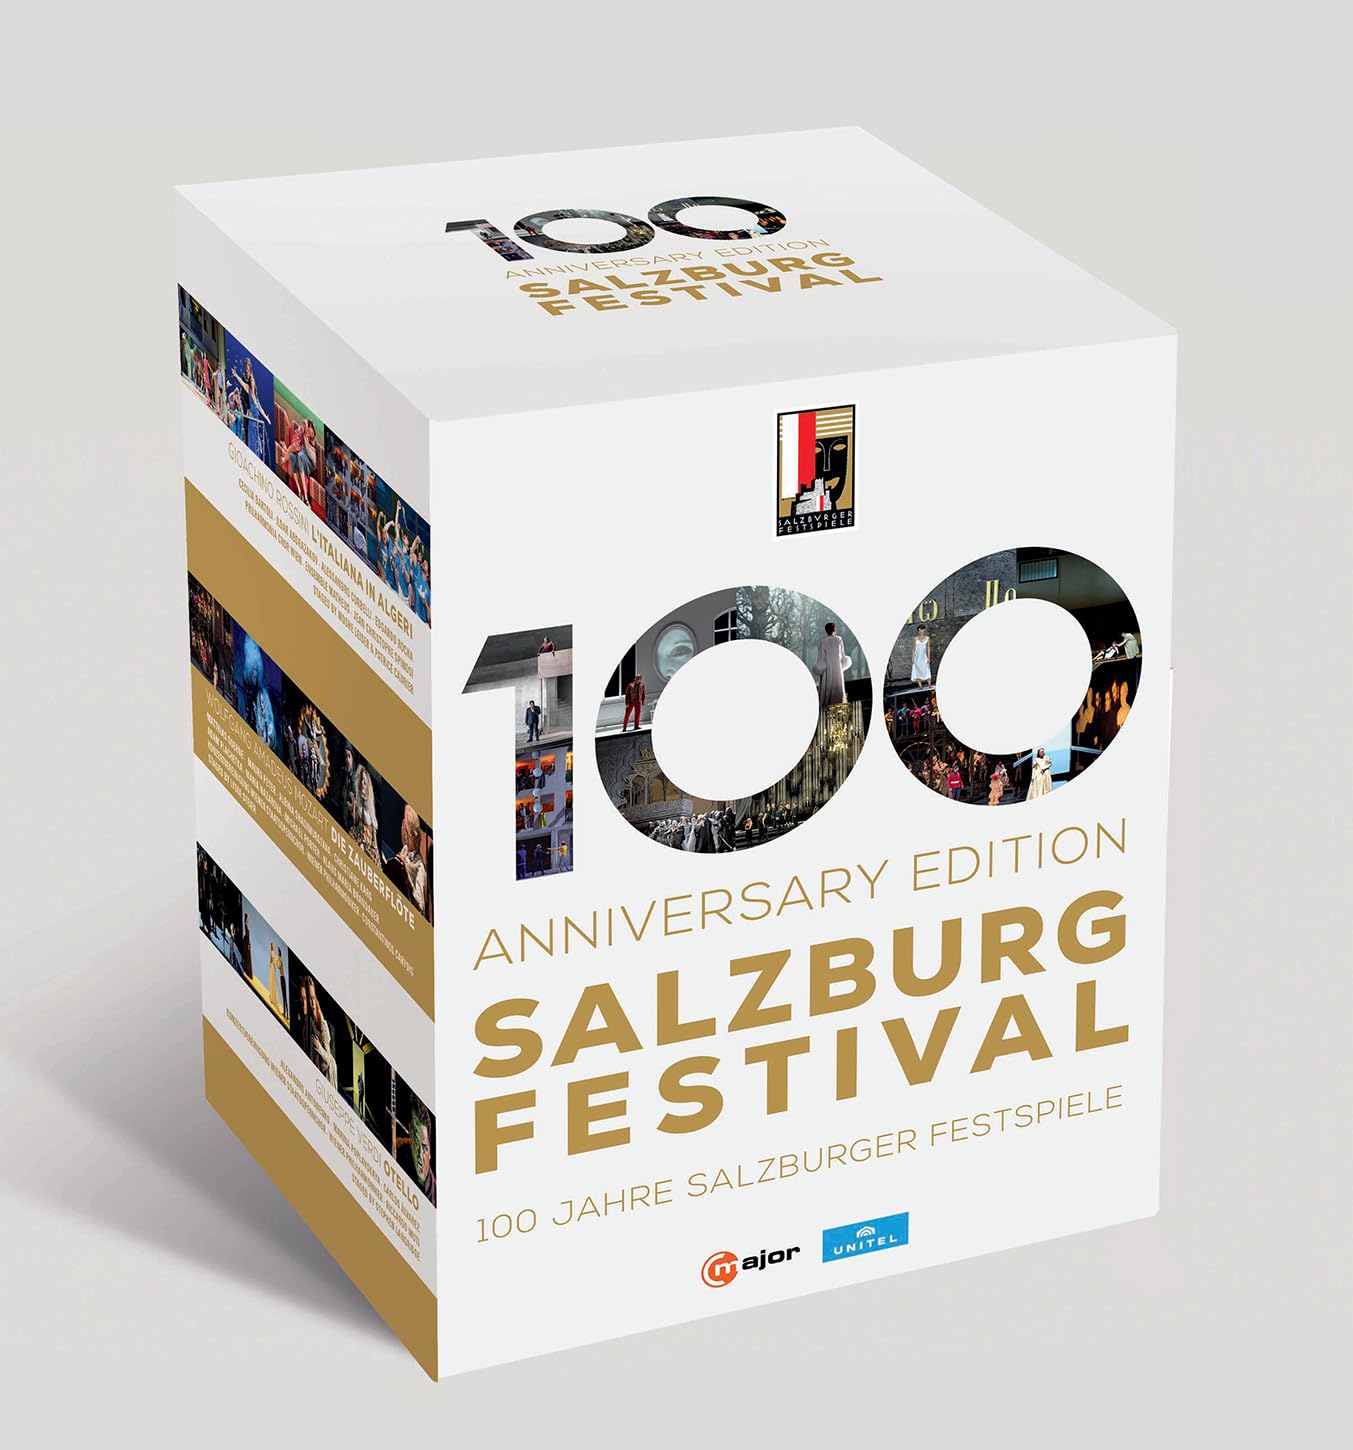 100 Anniversary Edition - Salzburg Festival [17 DVDs] [Salsi, Rebeka, Pape, Castronovo, Bartoli, Abdrazakov, Grigorian, Chiuri, Jovanovich]